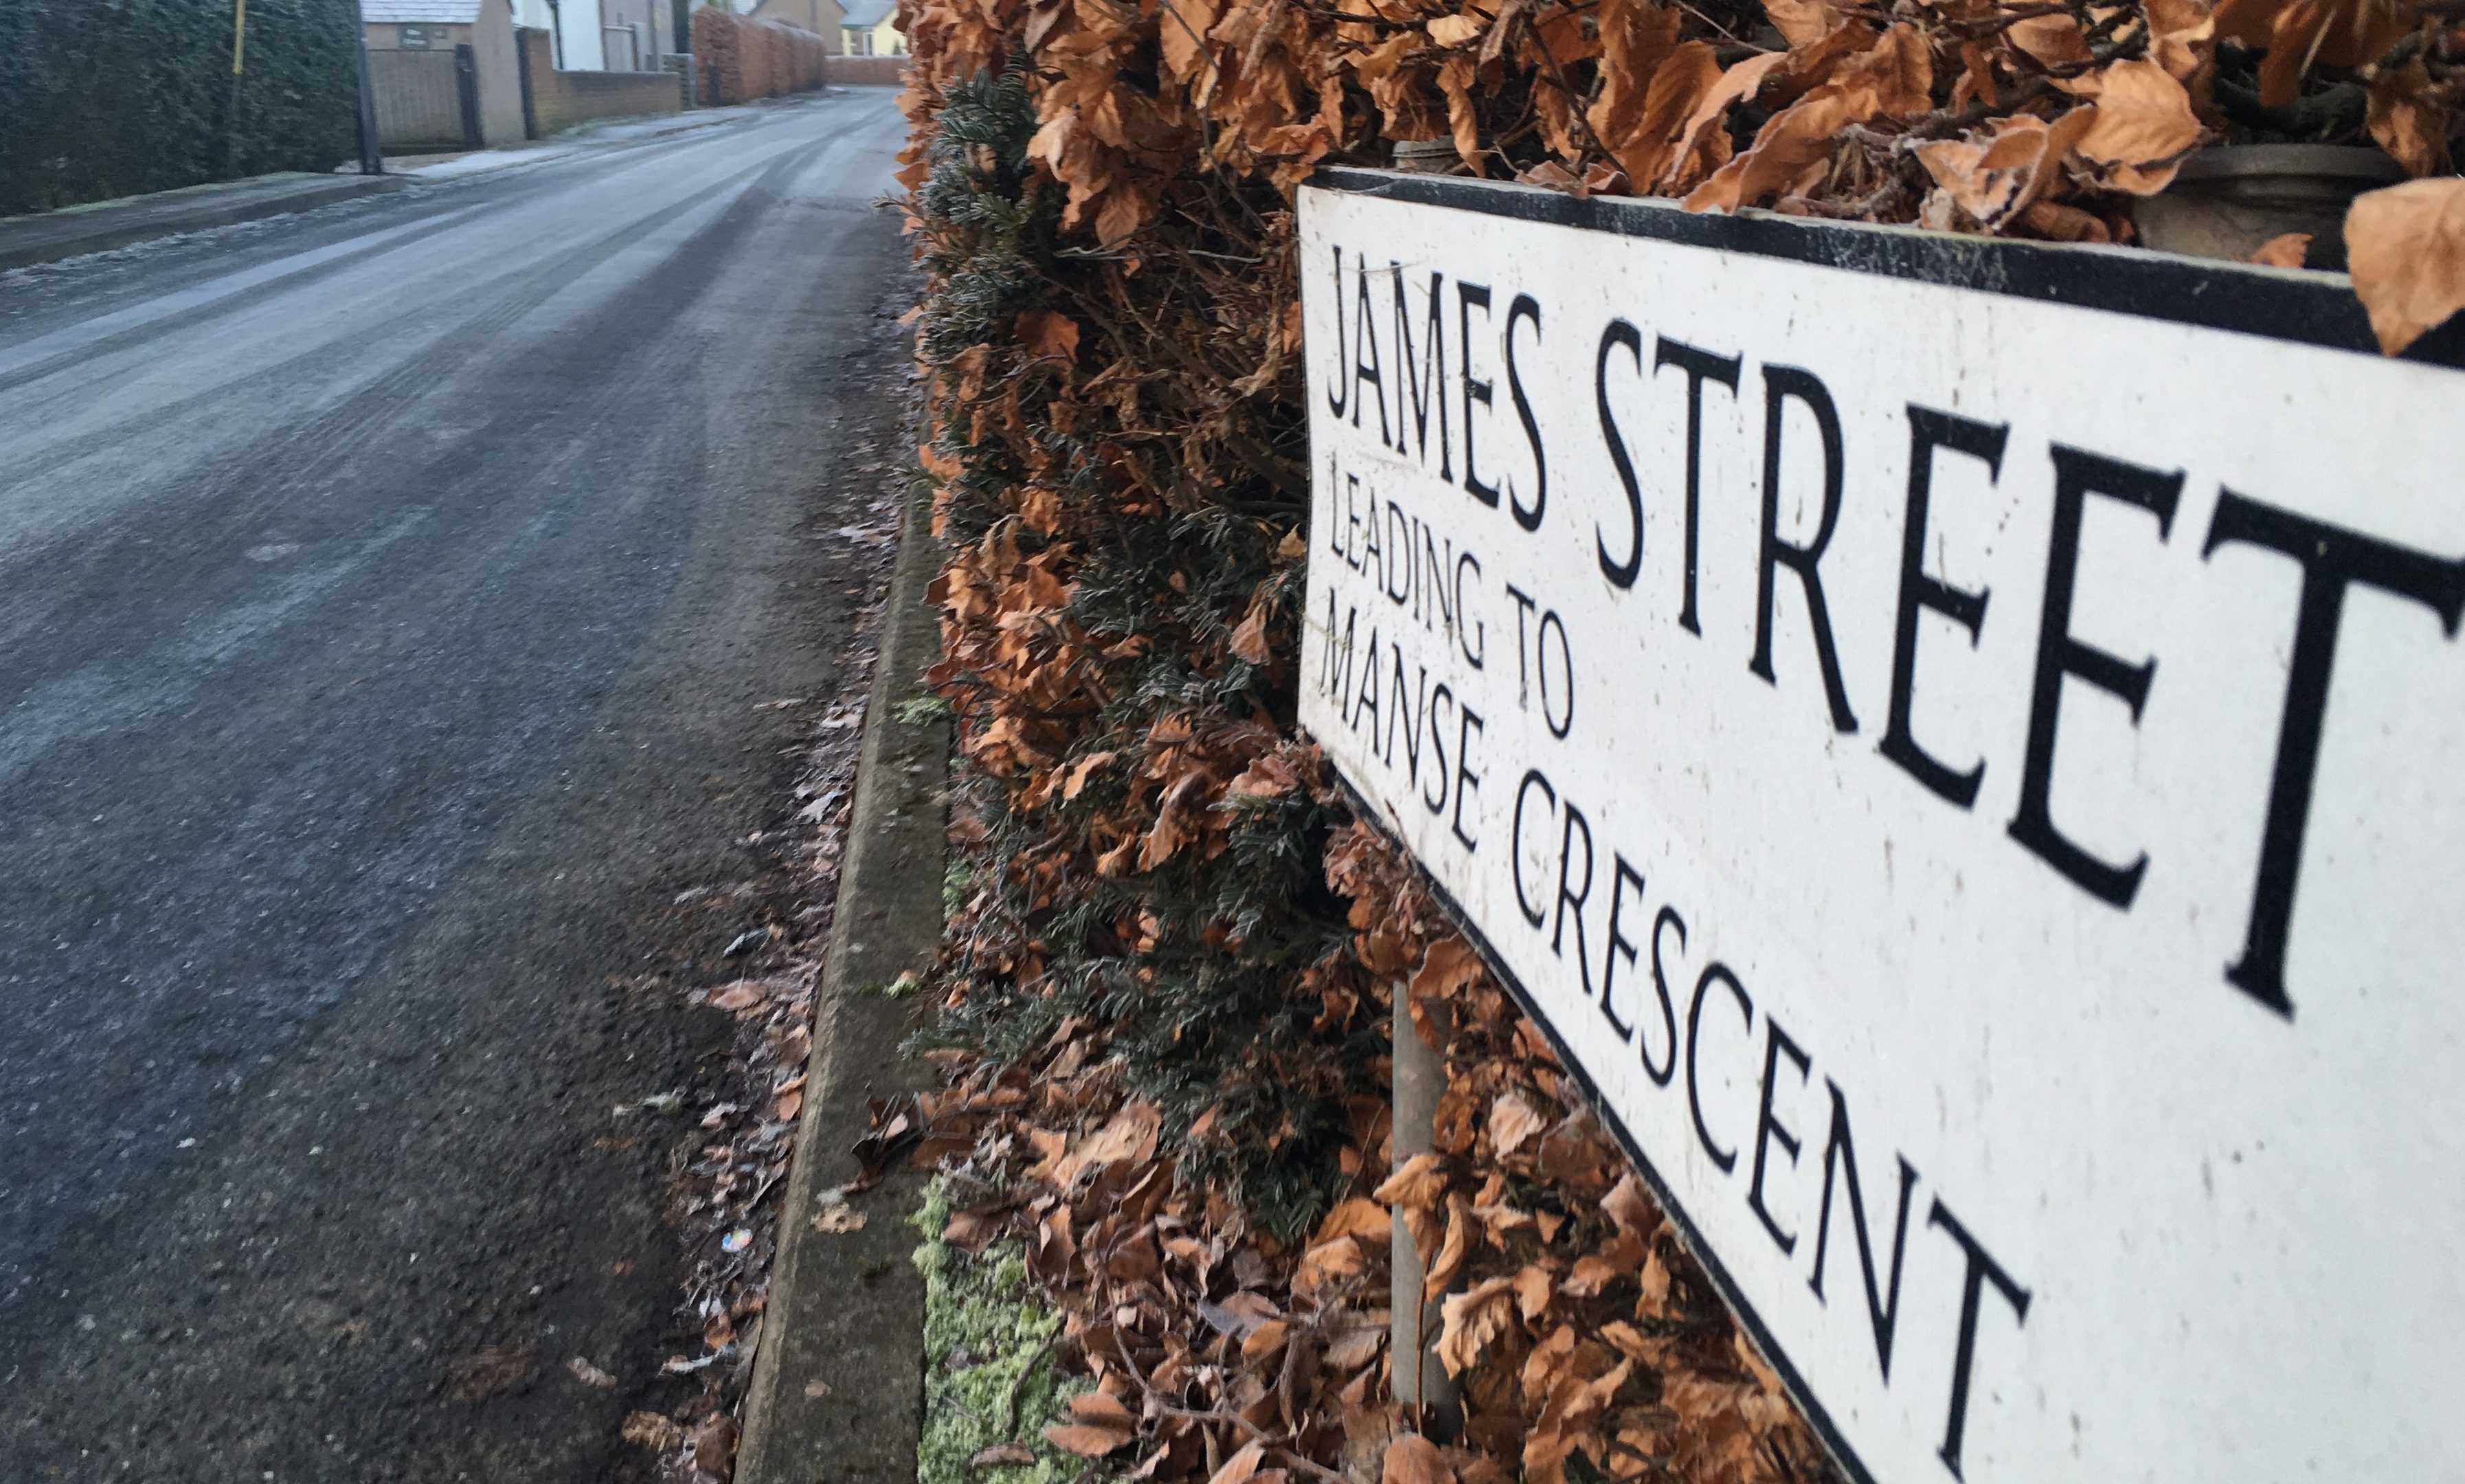 James Street in Stanley, where vandals struck.